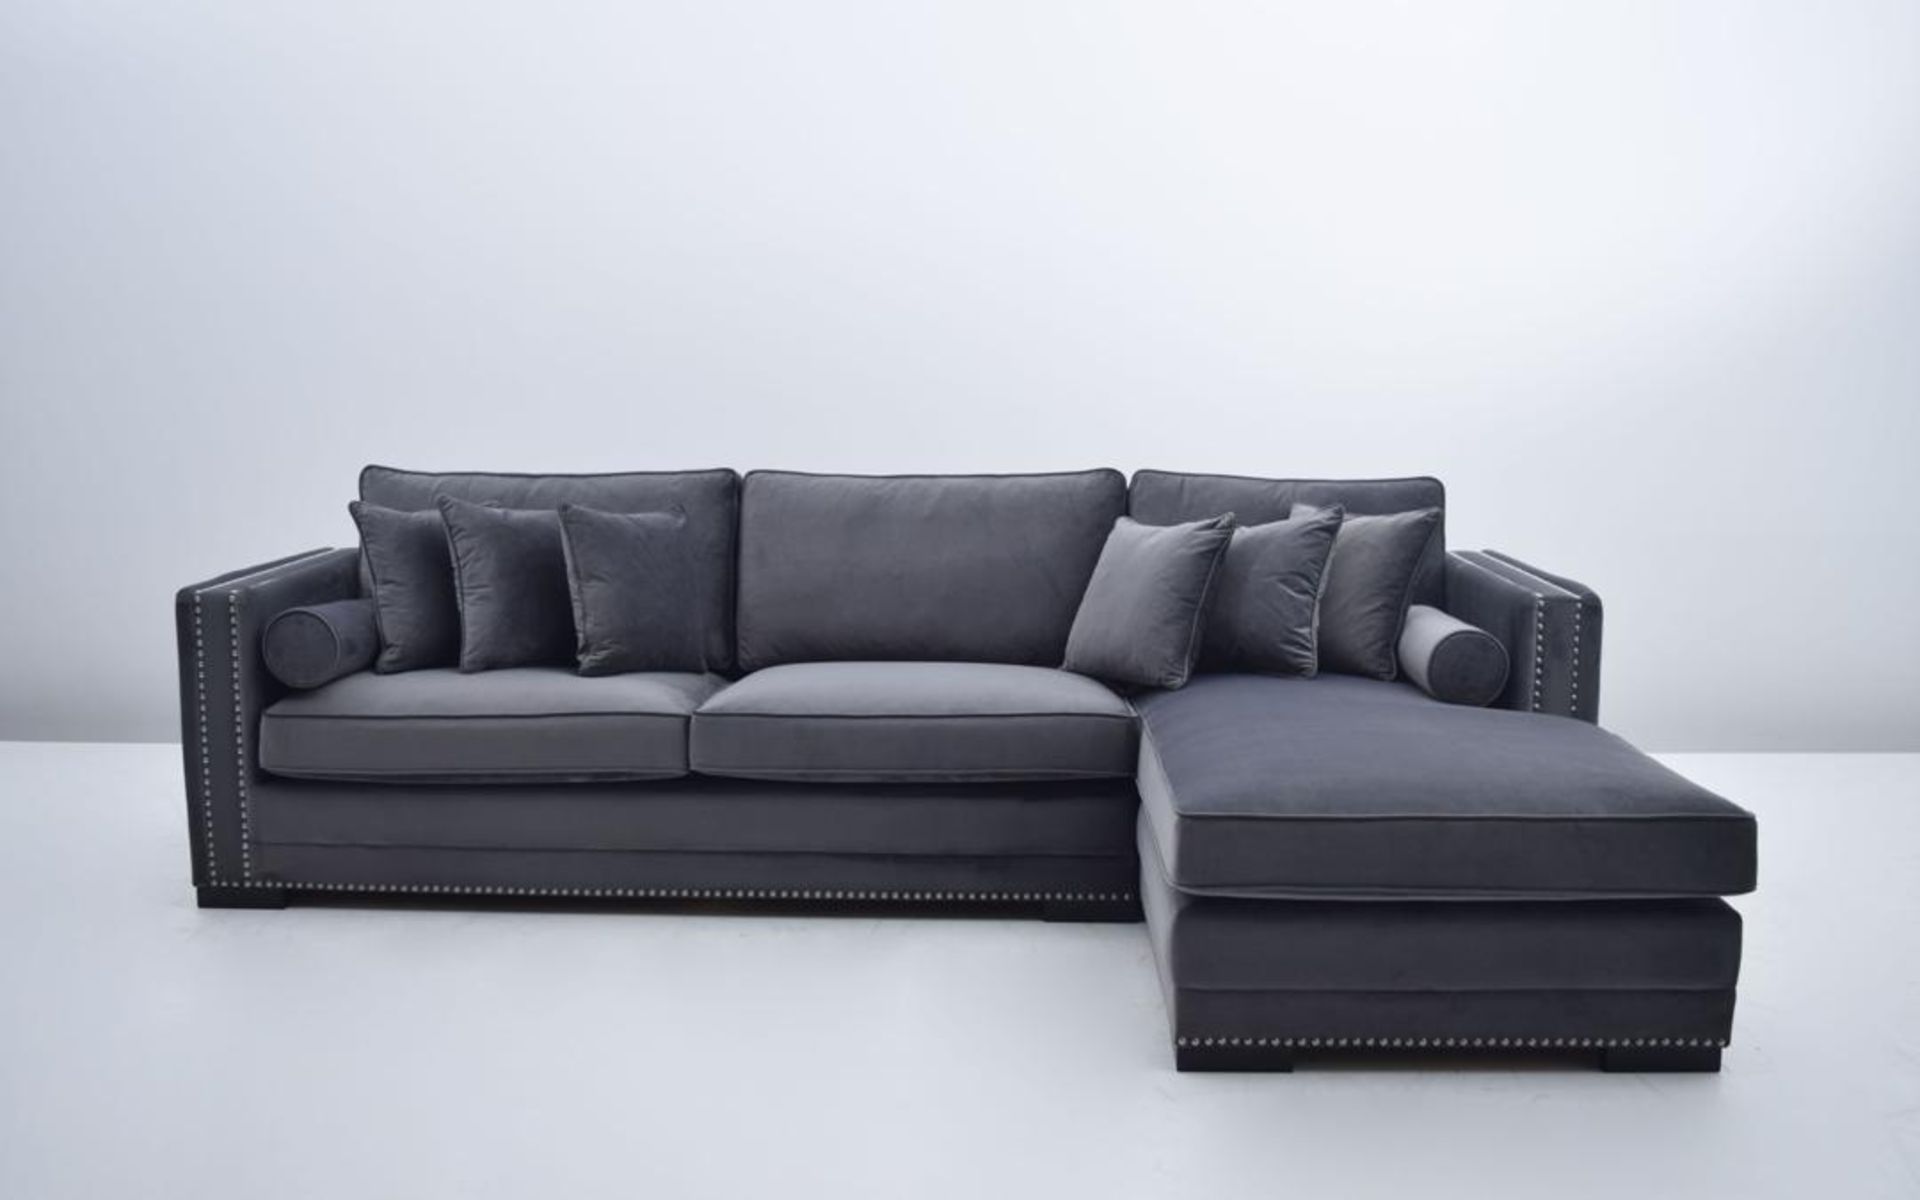 1 x HOUSE OF SPARKLES 'Lorenzo' Right-Handed Luxury Corner Sofa - Richly Upholstered In Dark Grey